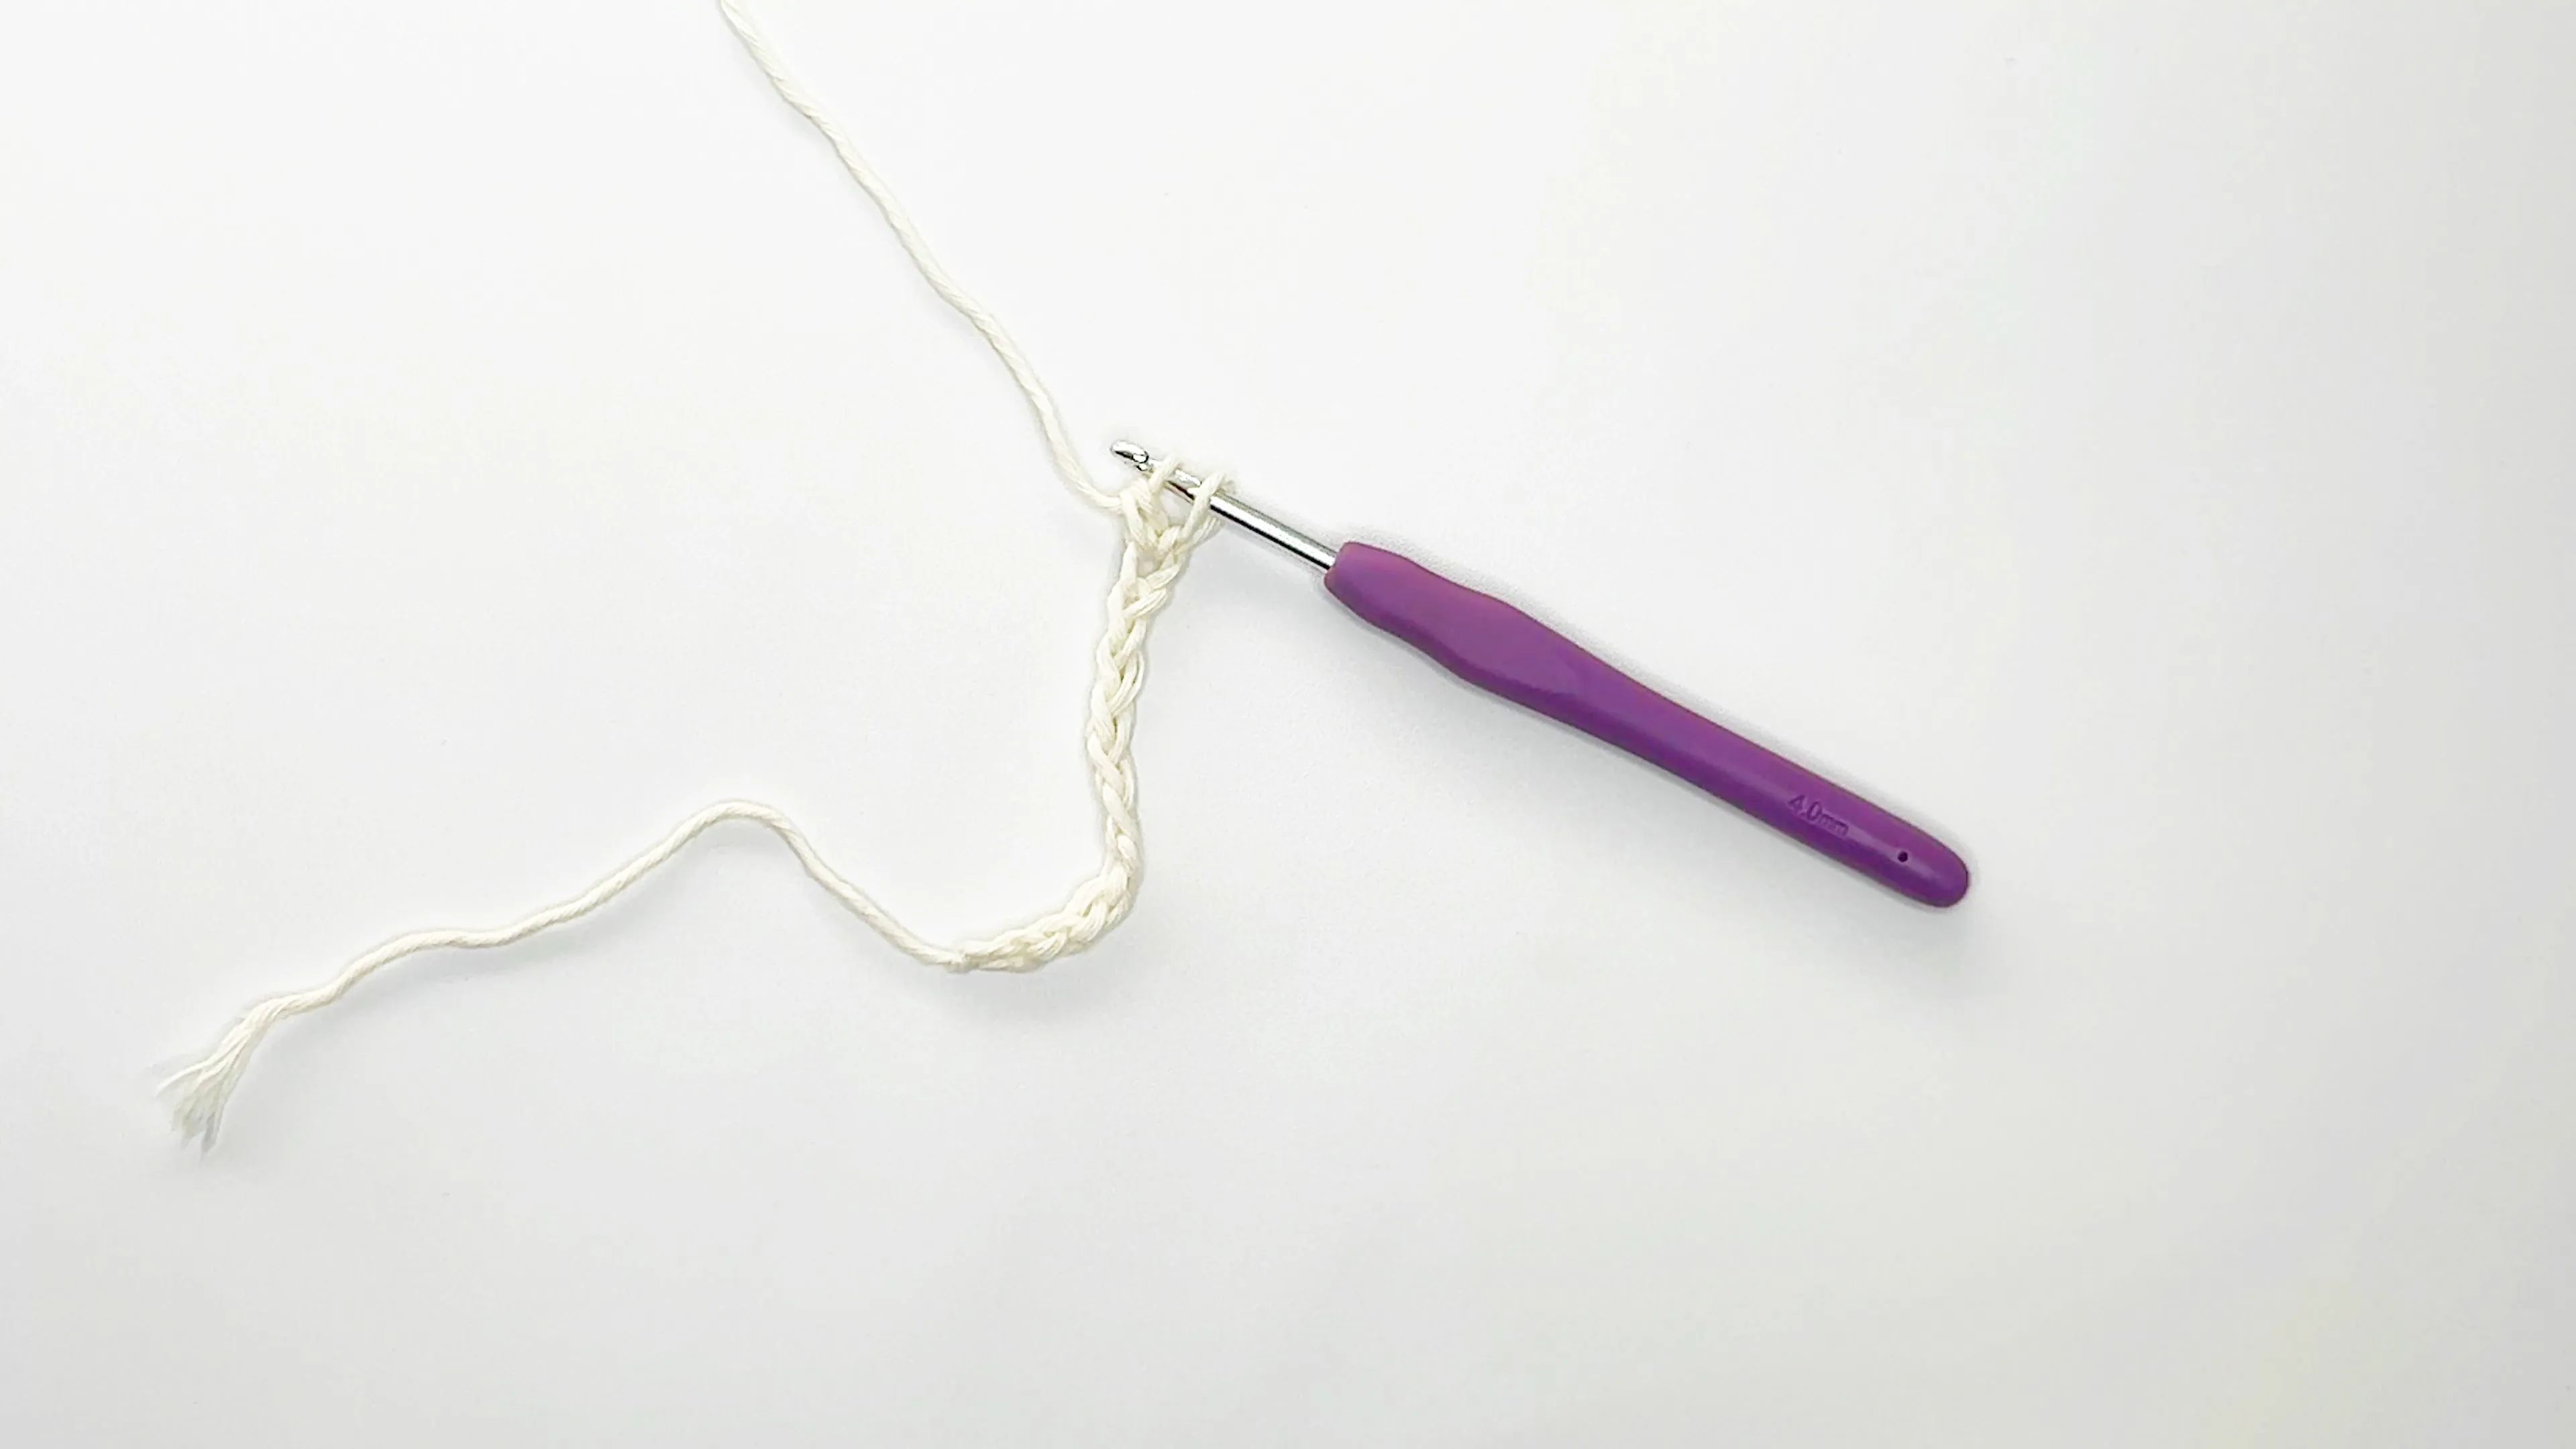 purple crochet hook and white yarn